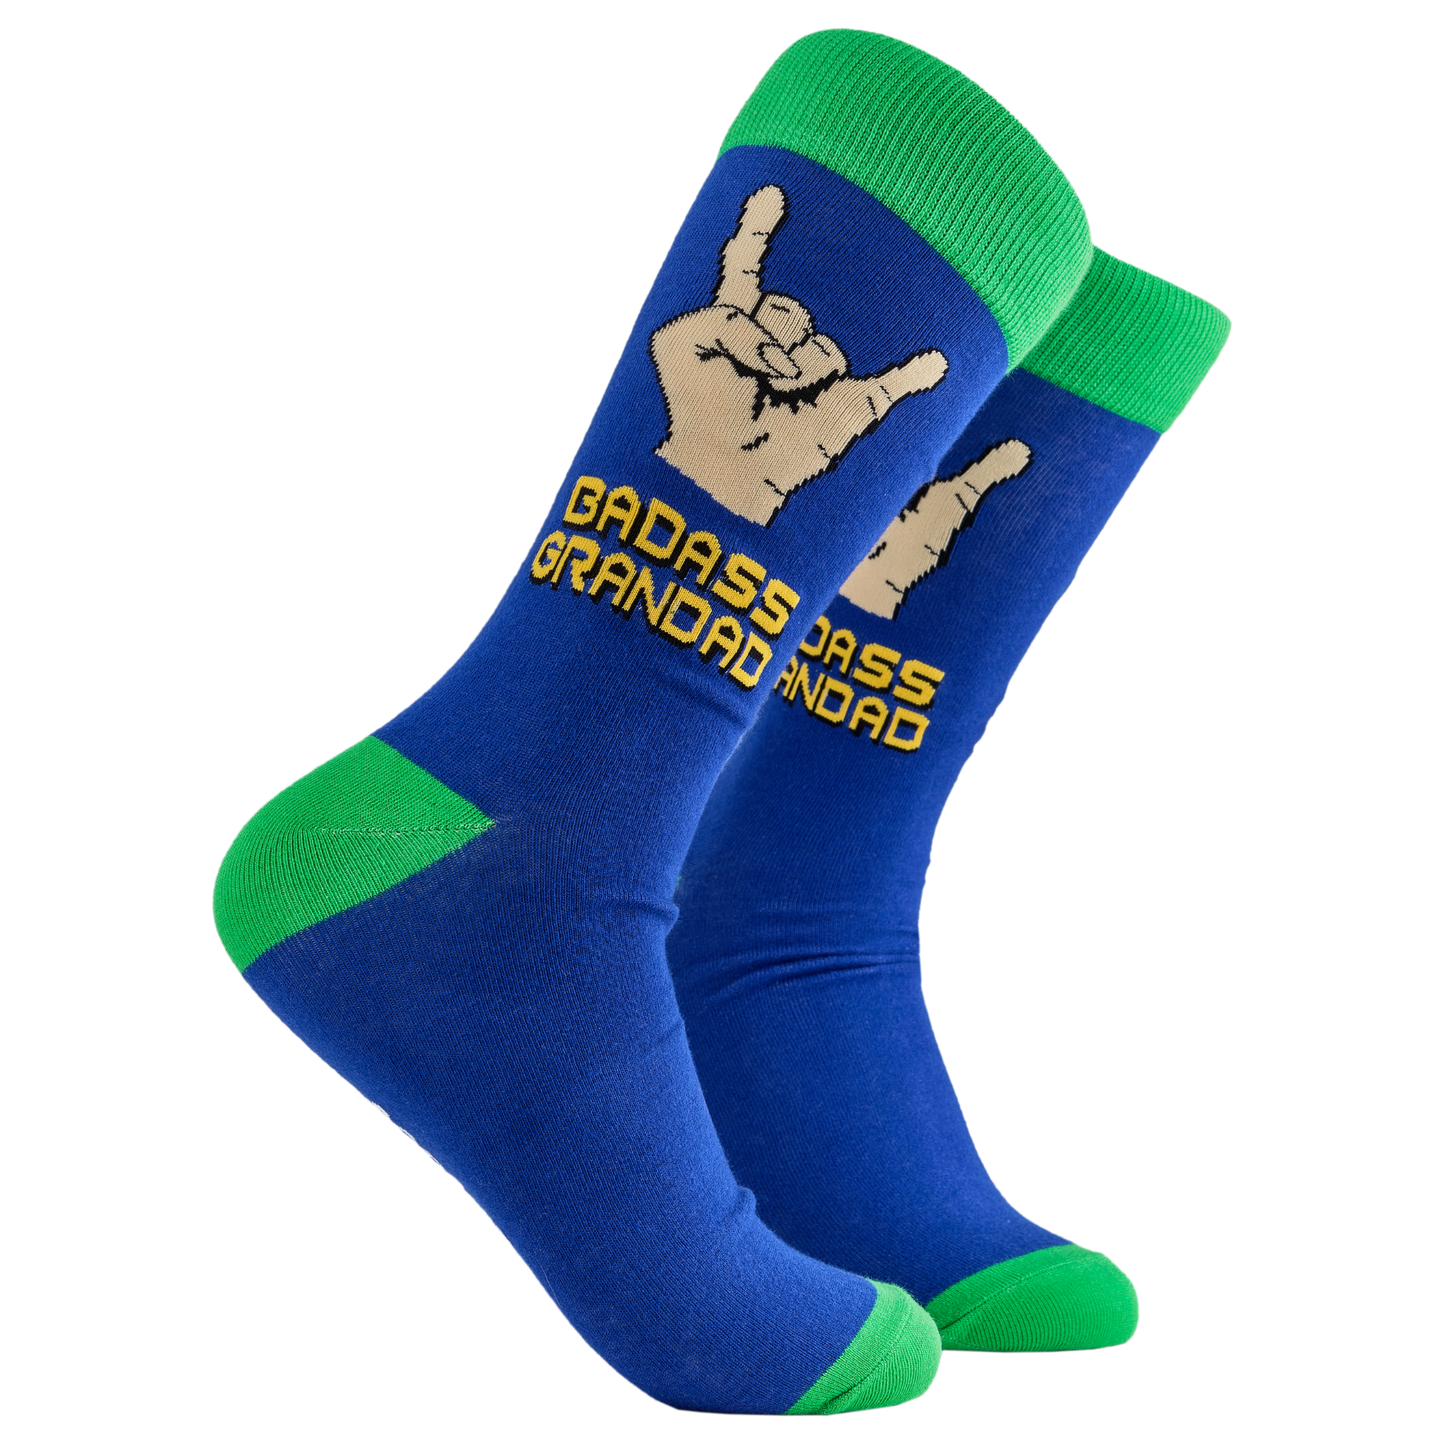 Badass Grandad Socks. A pair of socks depicting metal horns that say 'Badass Grandad. Blue legs, green cuff, heel and toe. 